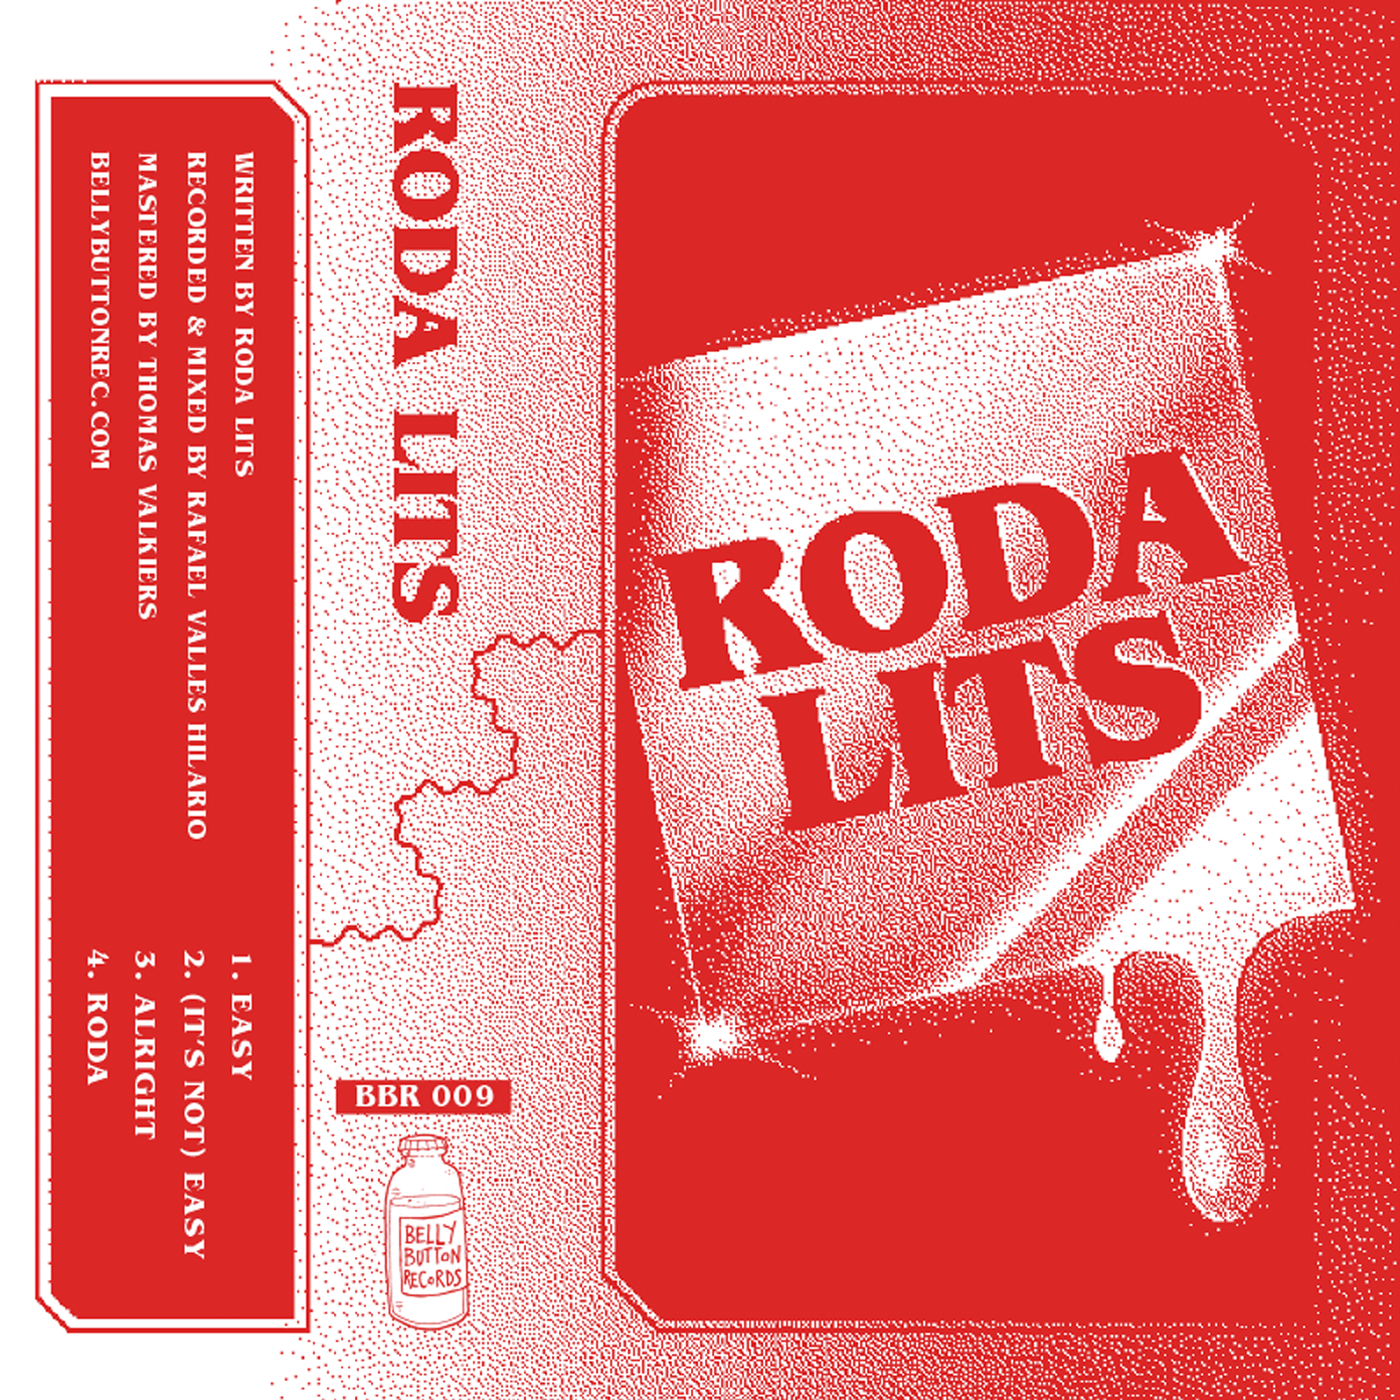 Roda Lits - Roda Lits EP front cover